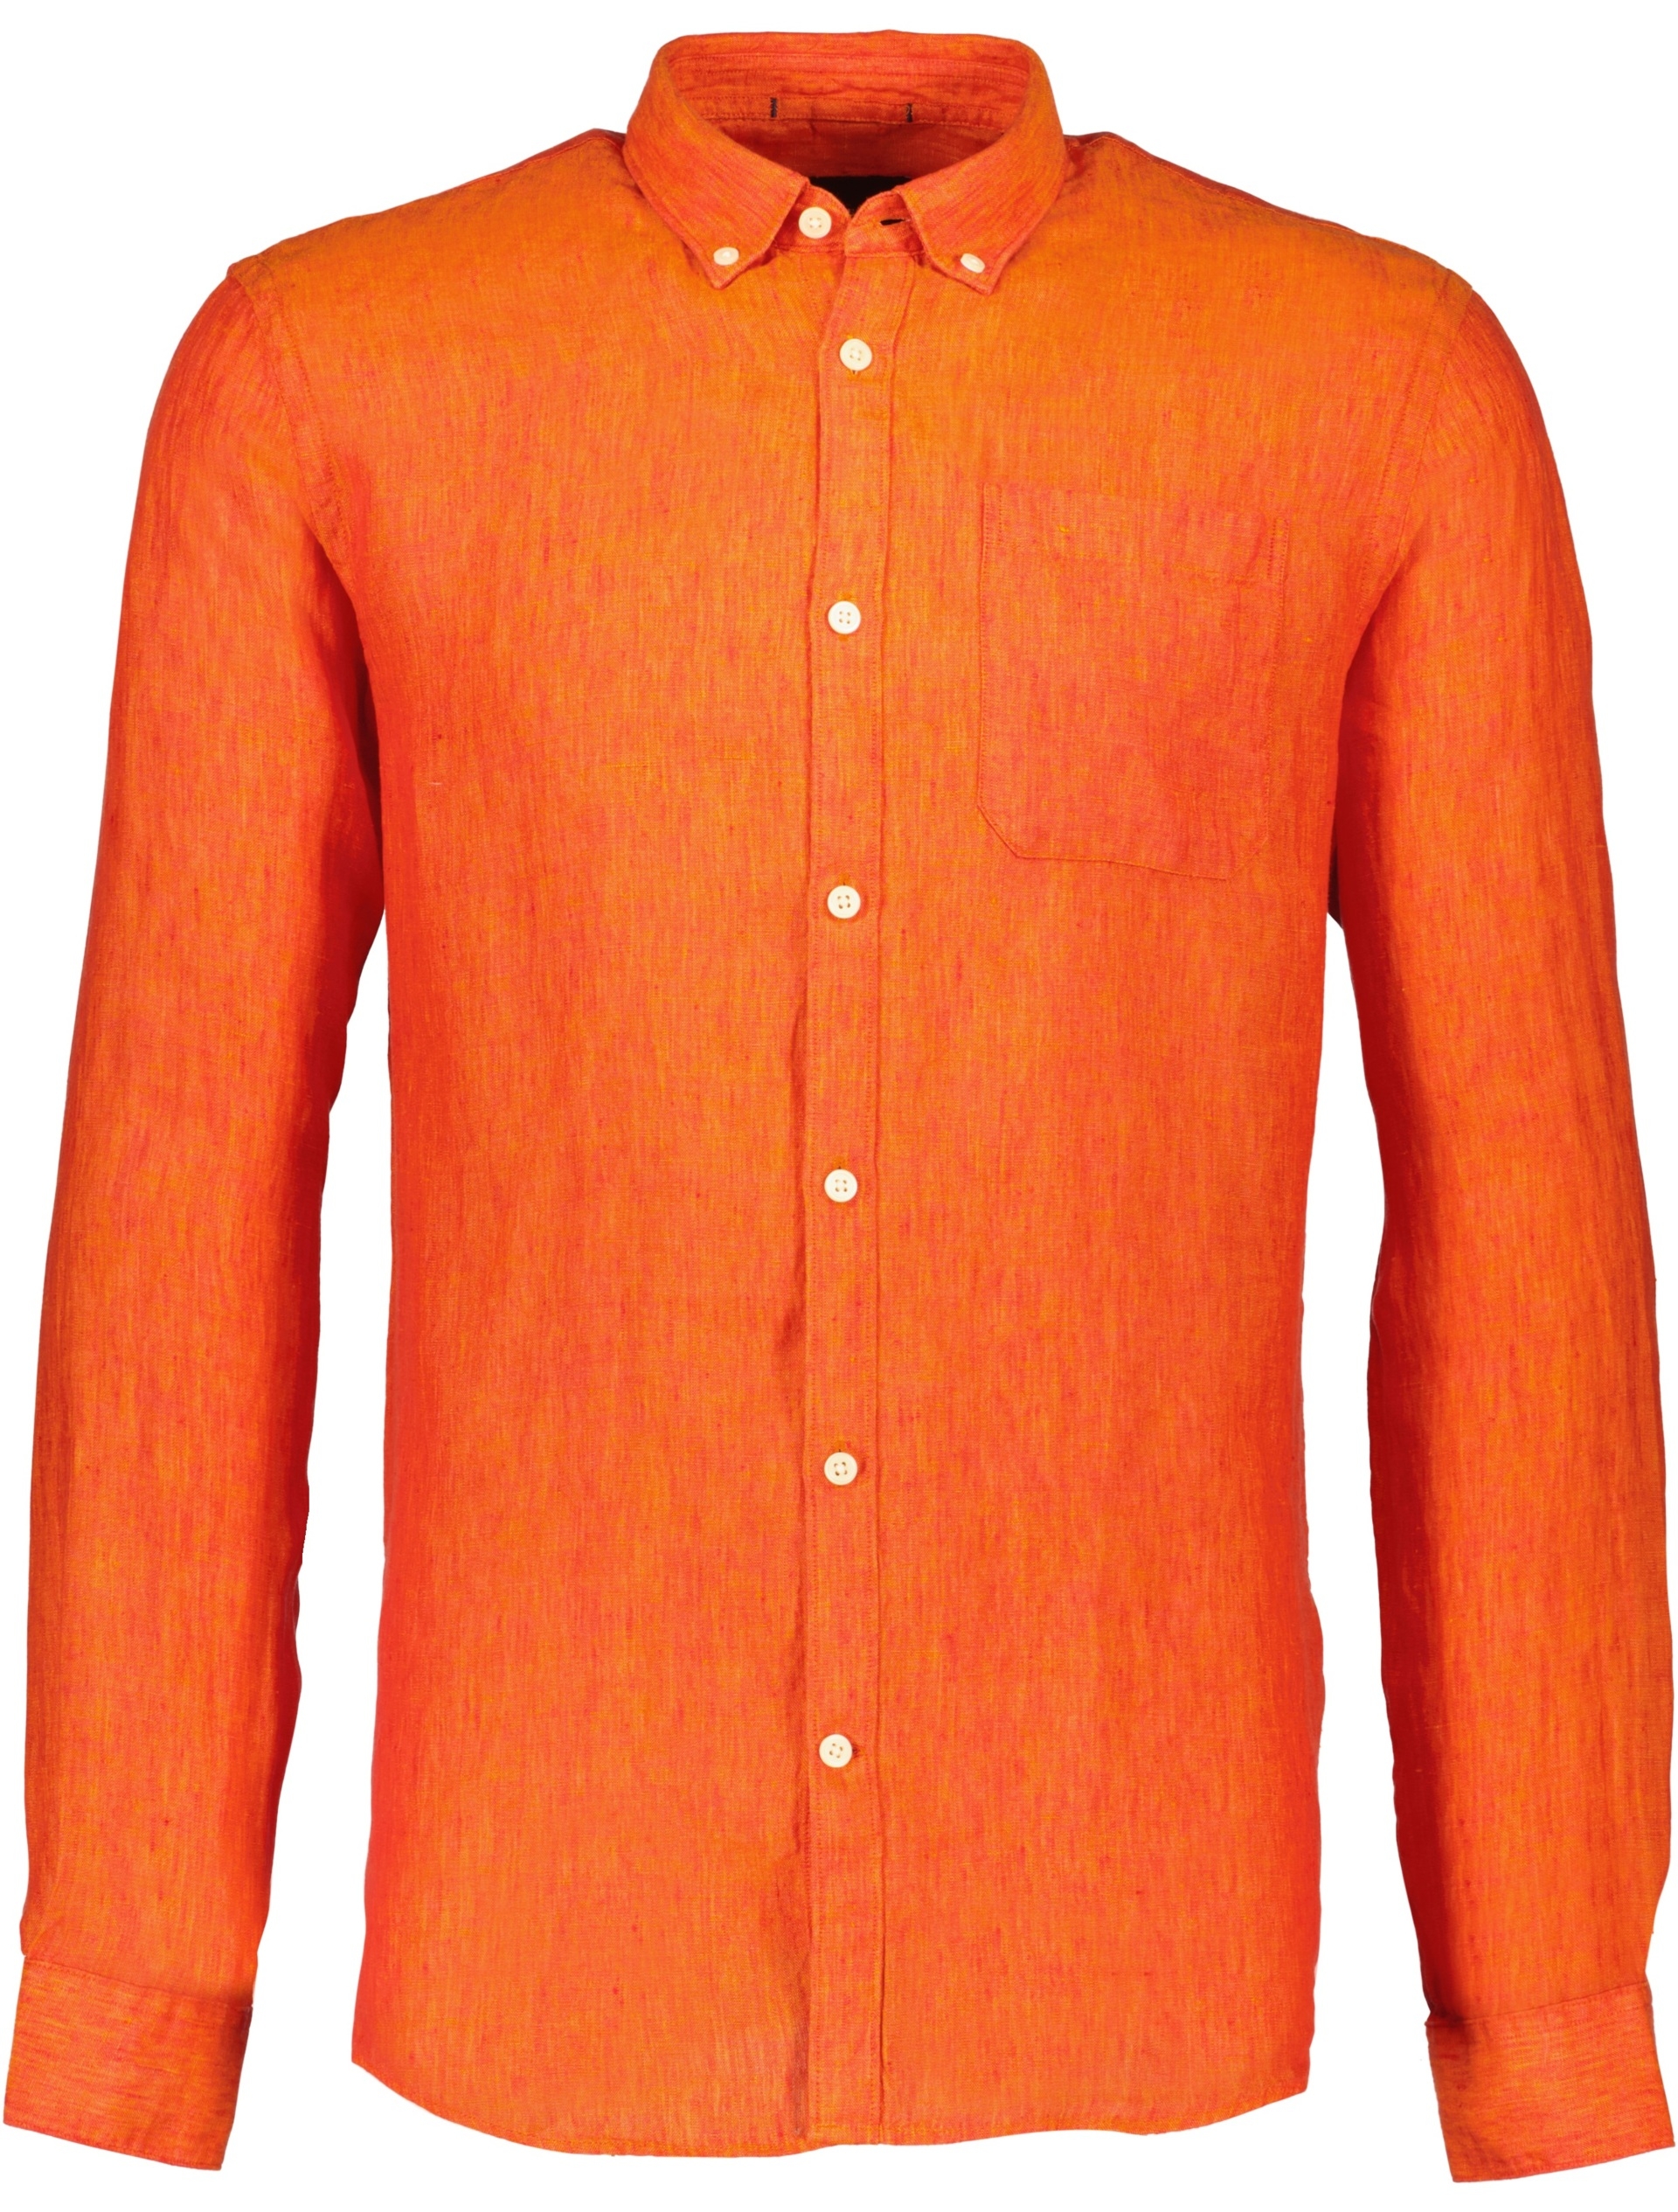 Lindbergh Linen shirt orange / orange mel